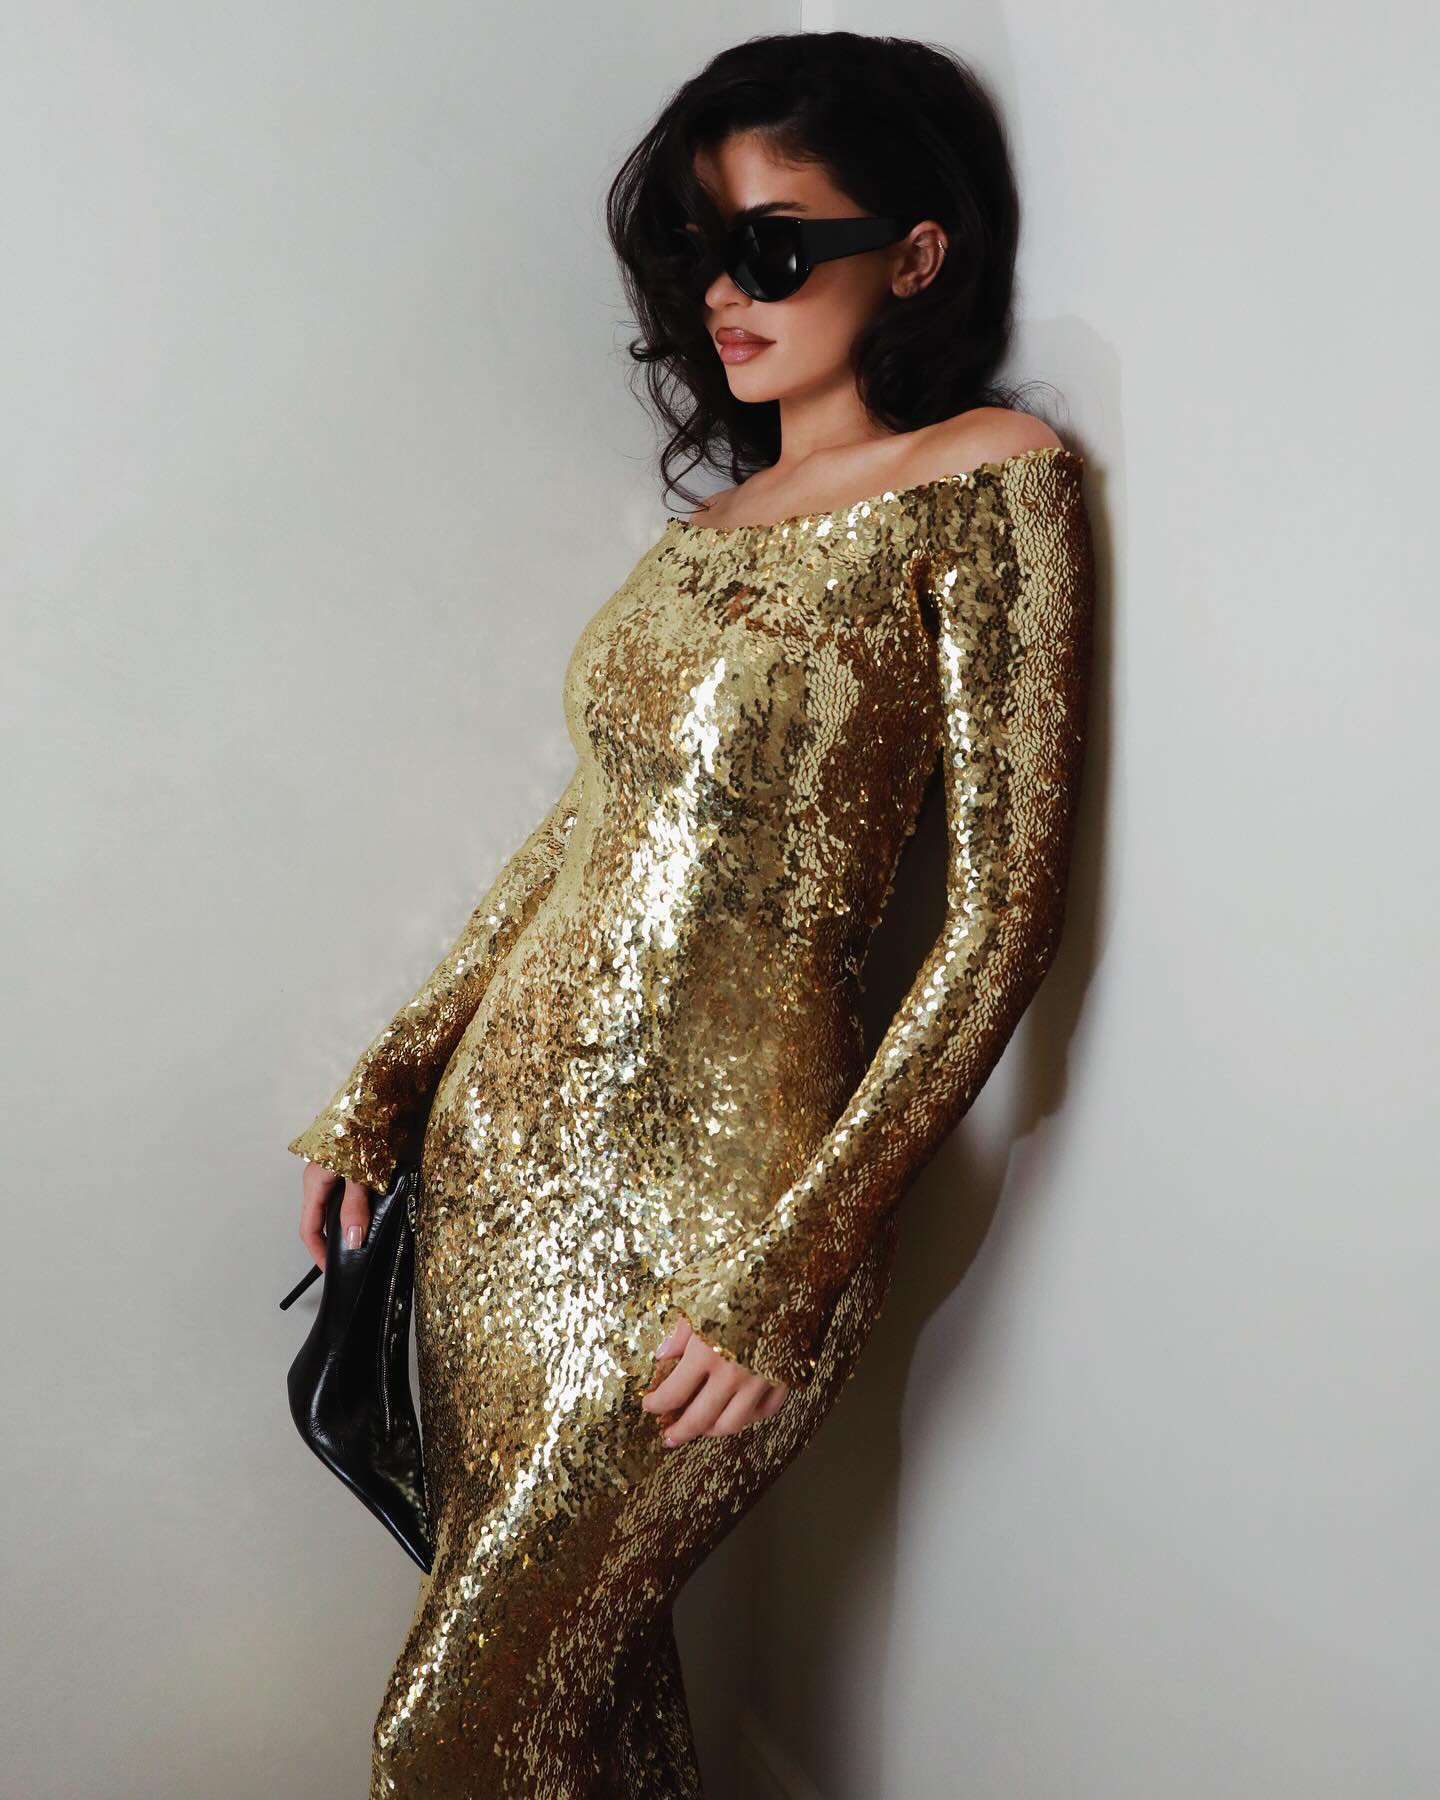 Photos n°6 : Kylie Jenner’s Gold Christmas Dress!